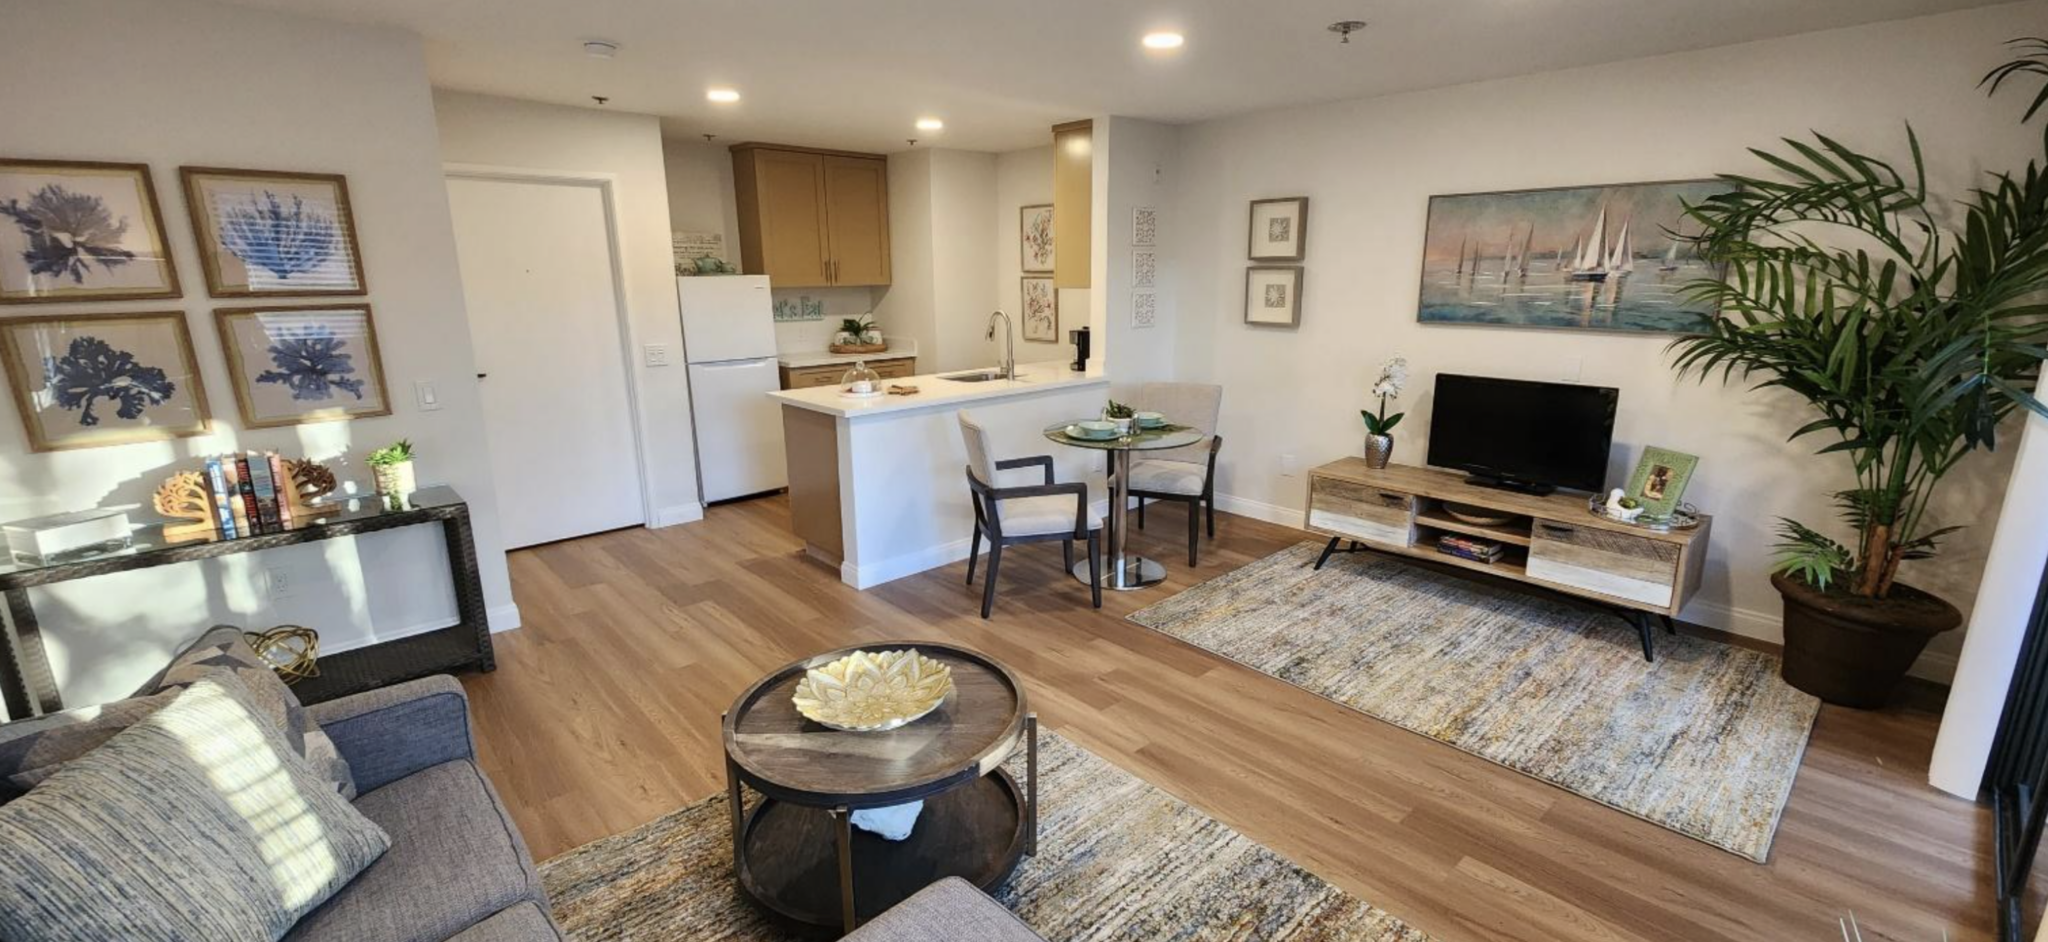 The new One-Bedroom, Open Kitchen Floorplan Design at Silvergate Fallrook.